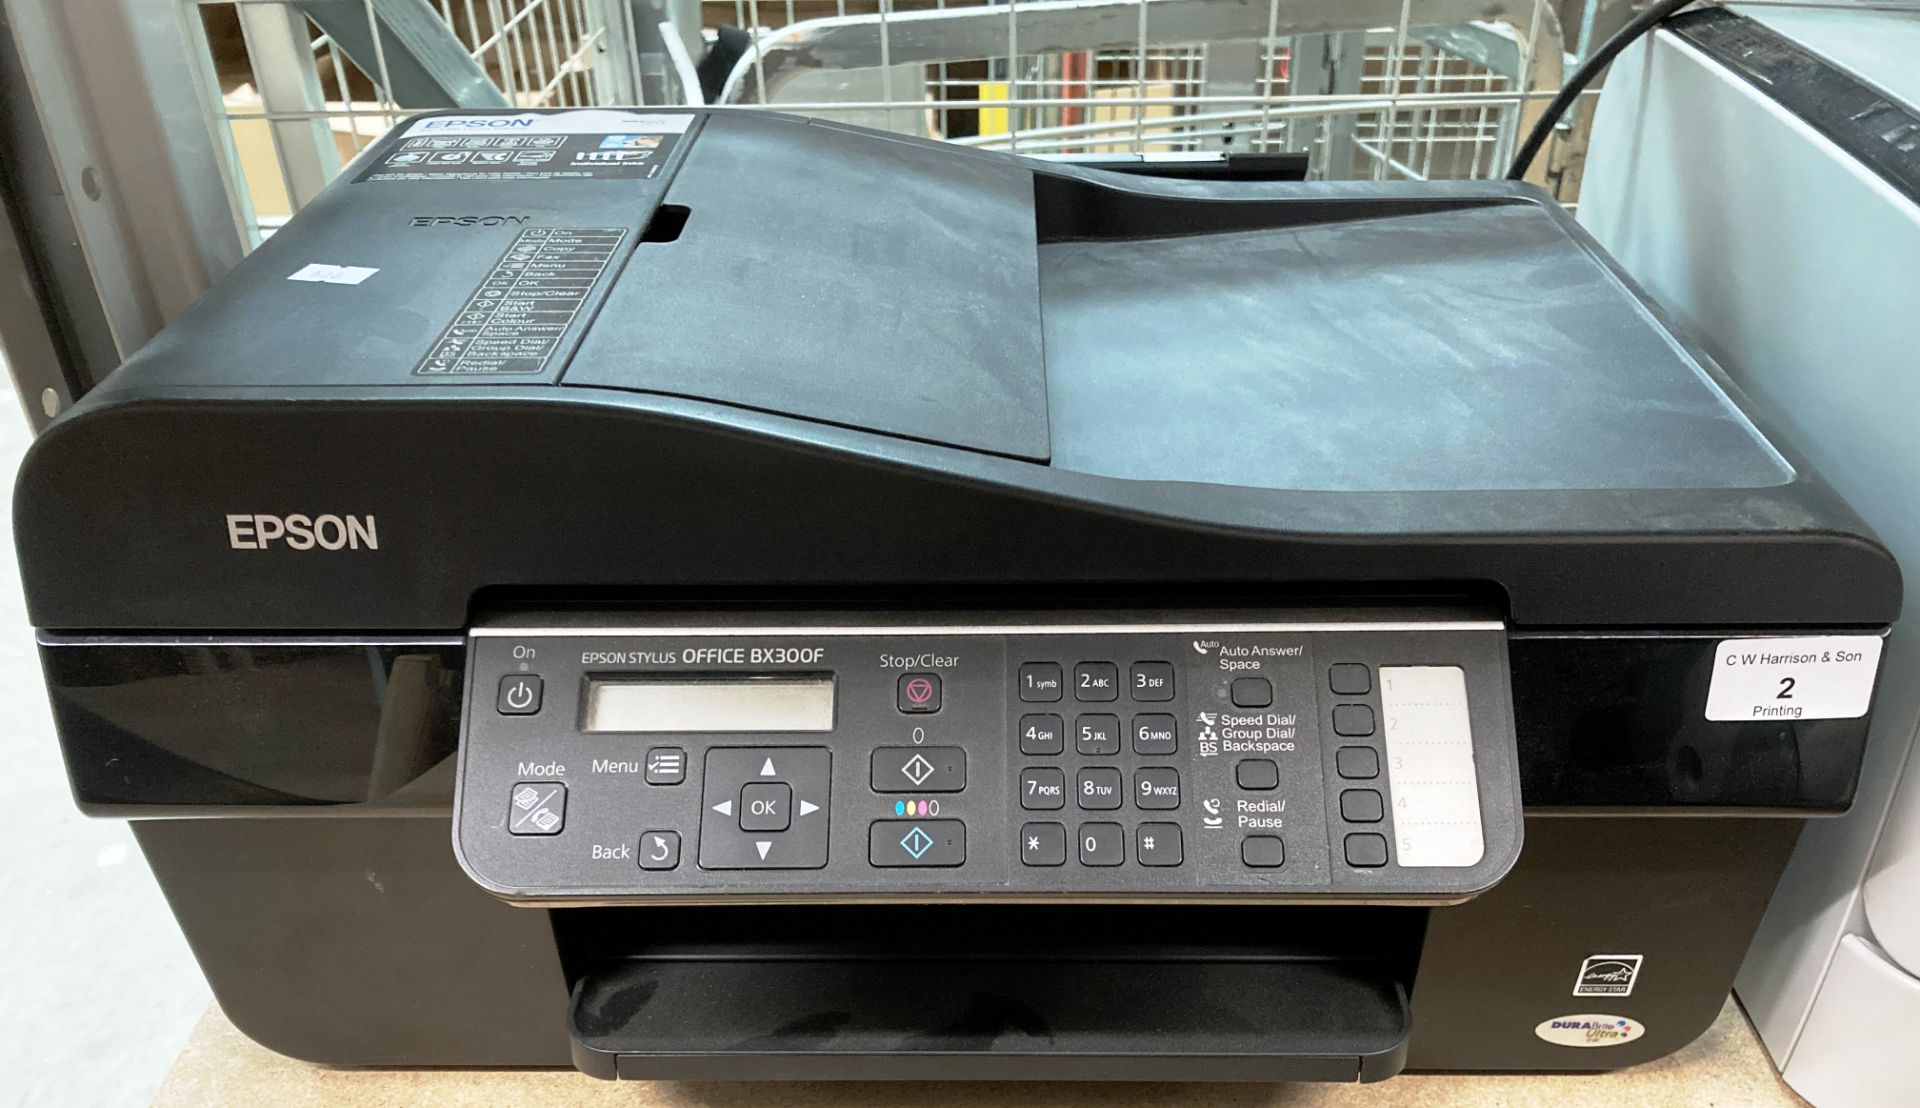 Epson Stylus office BX300F printer